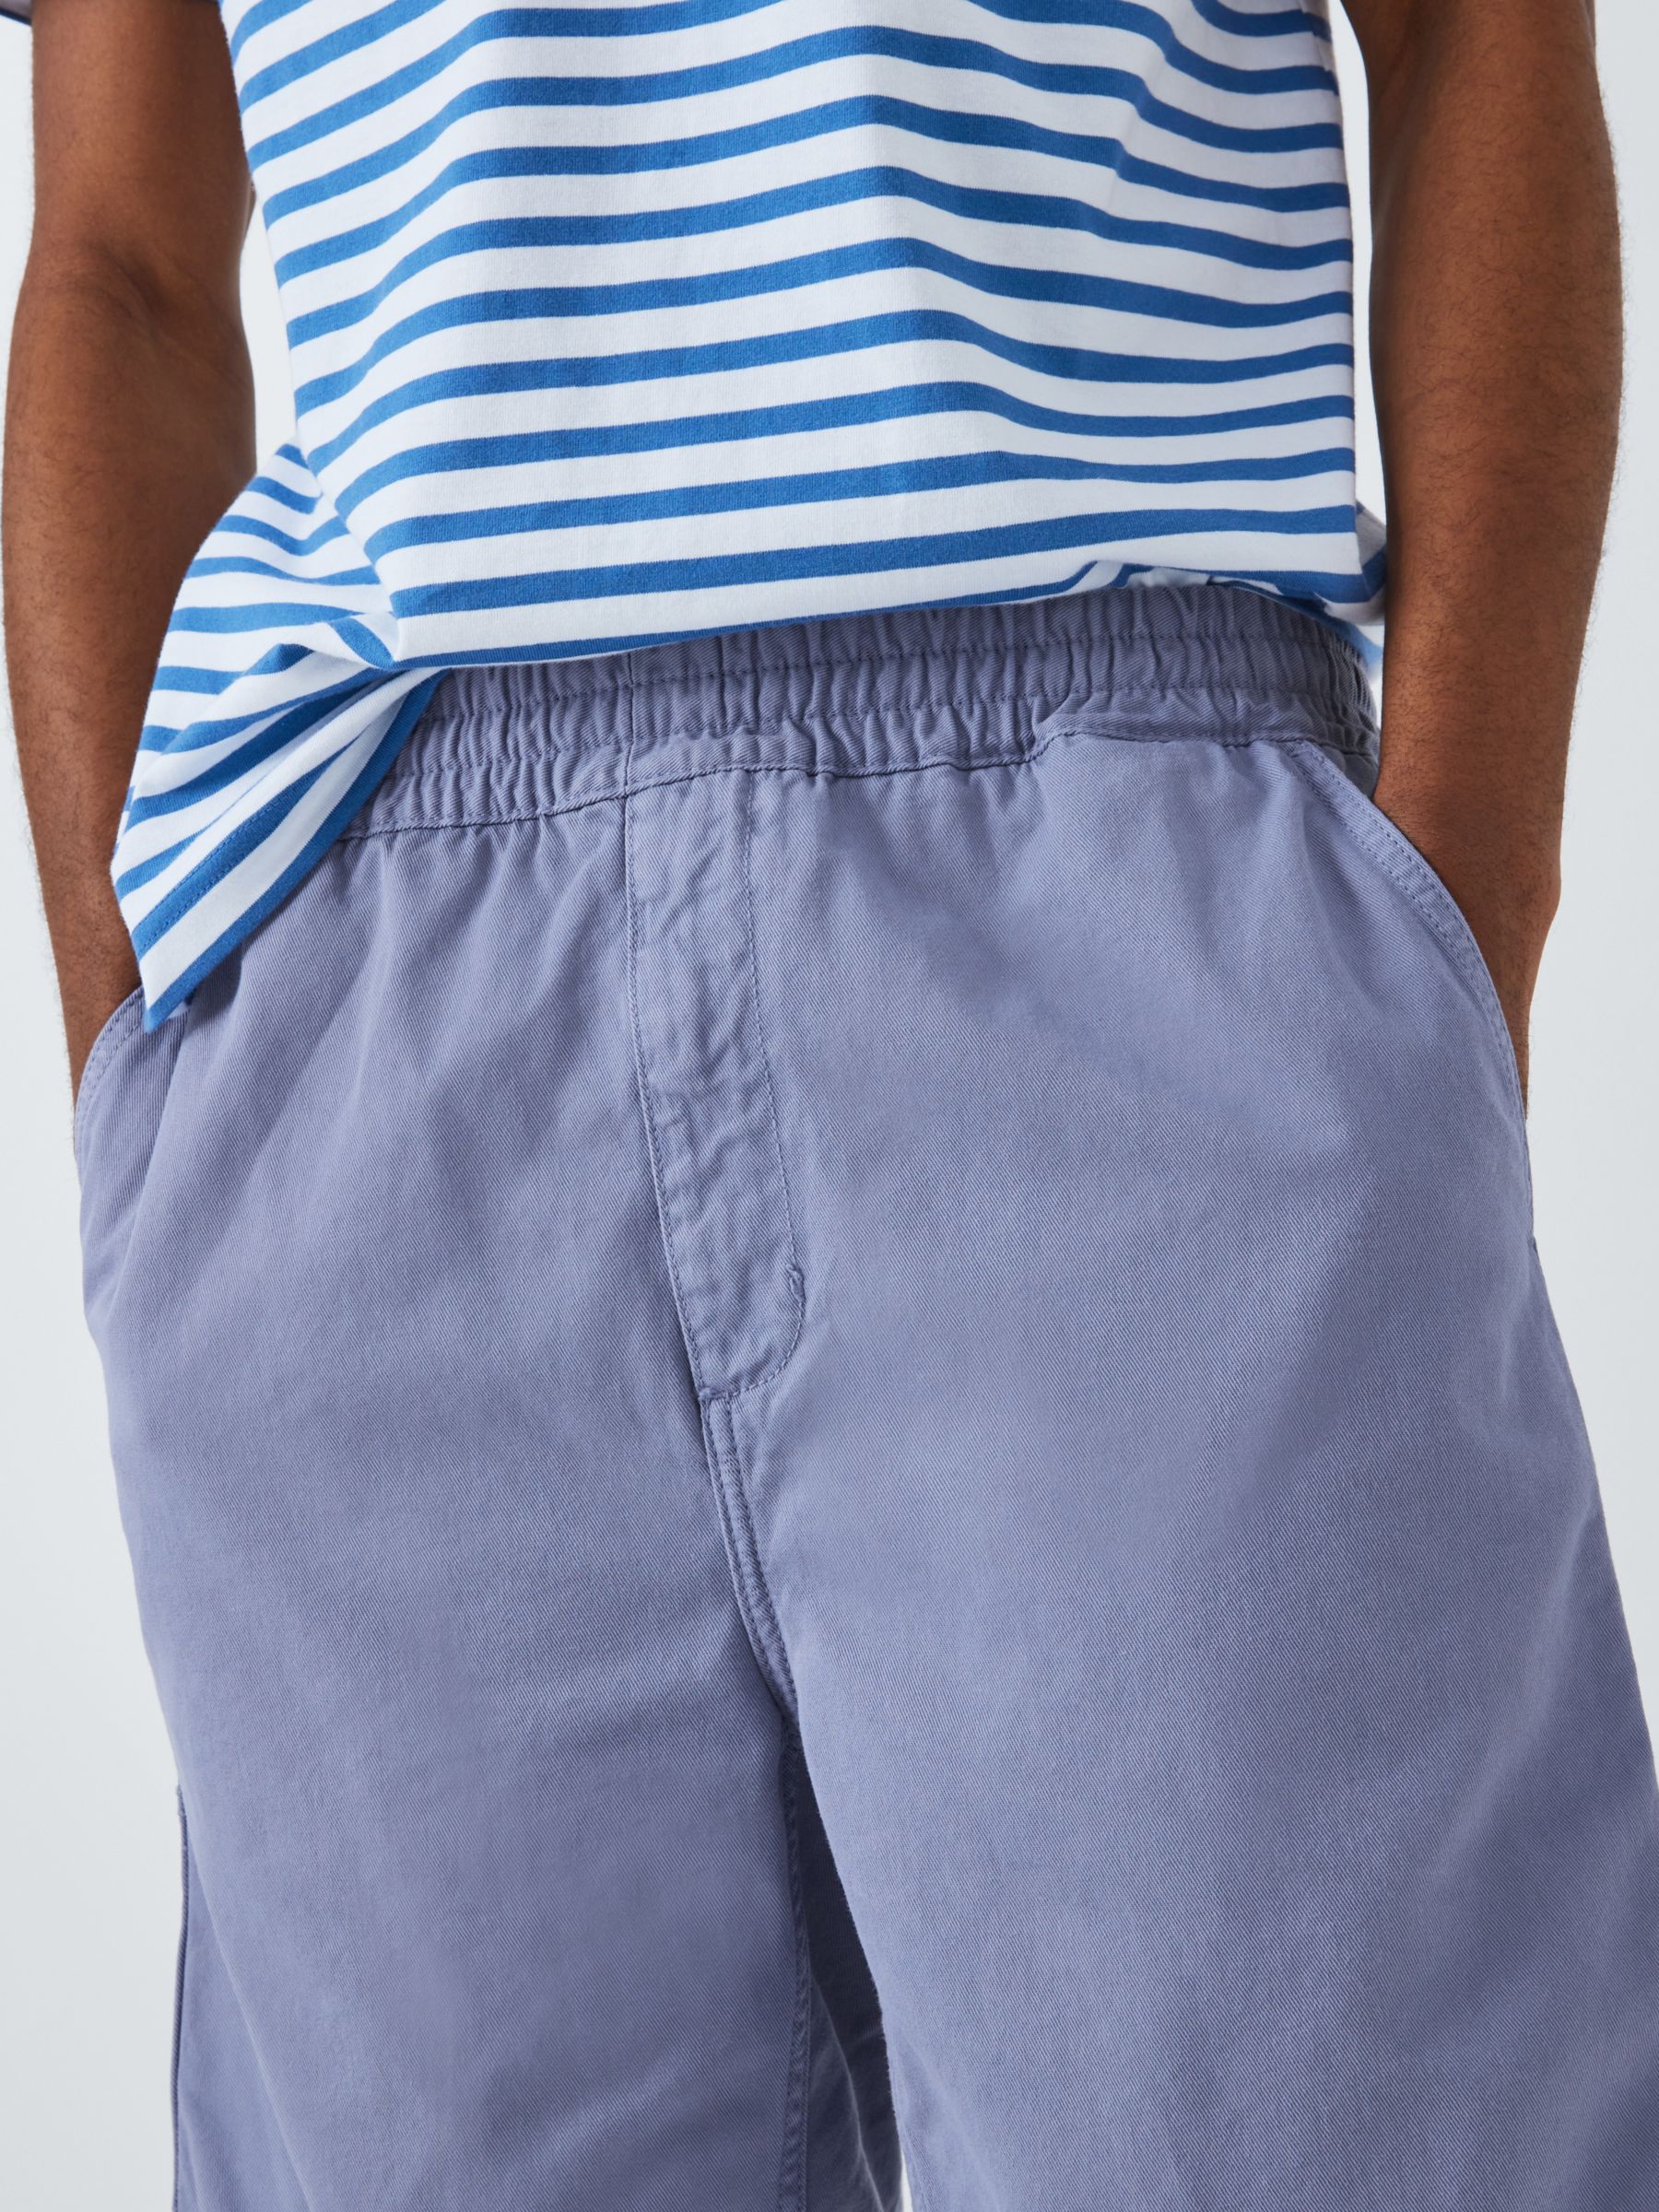 Carhartt WIP Flint Organic Cotton Shorts, Bay Blue, L